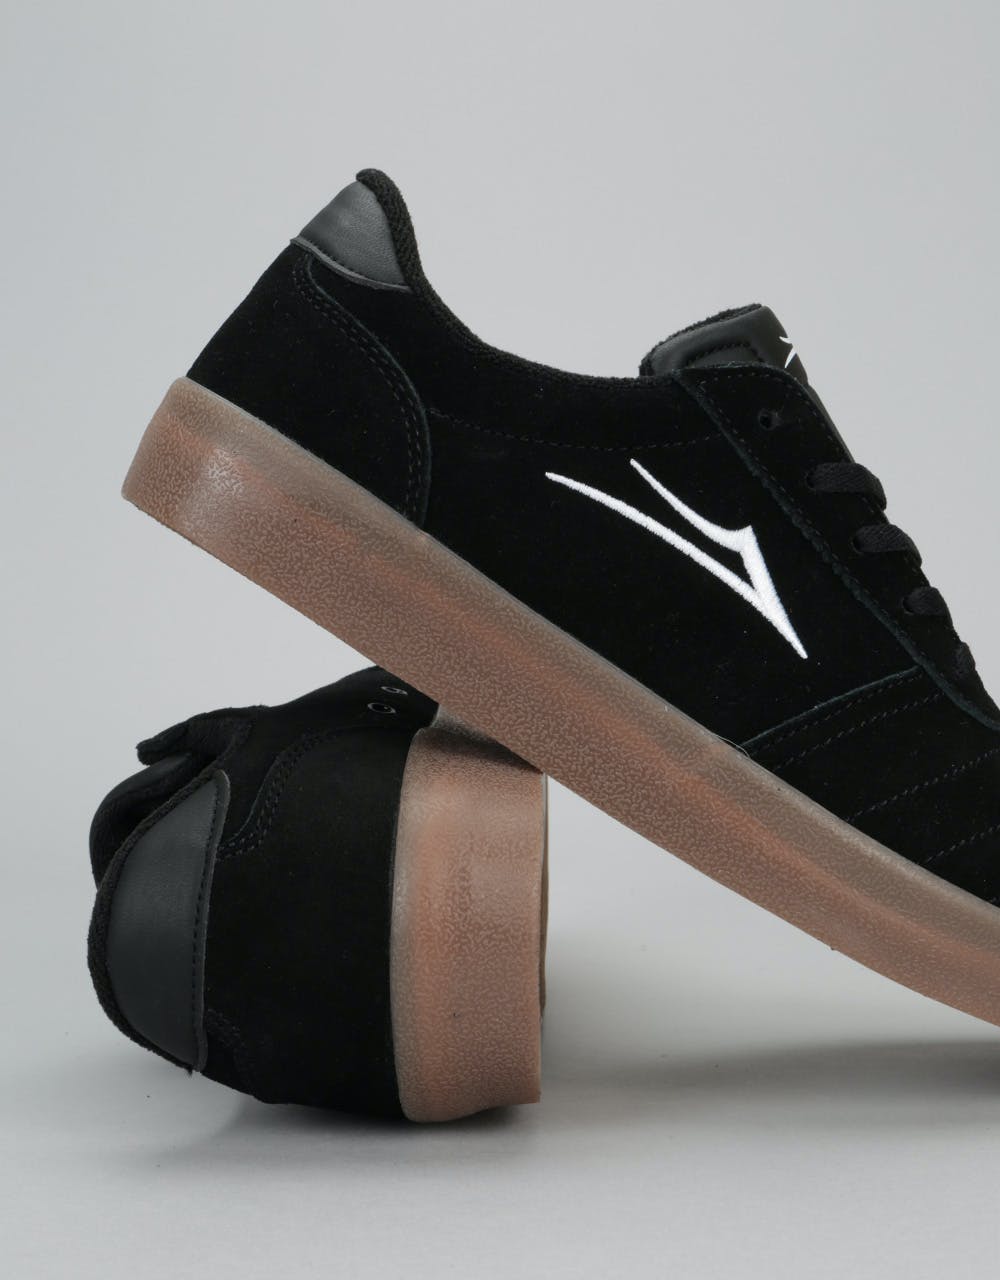 Lakai Salford Skate Shoes - Black/Gum Suede